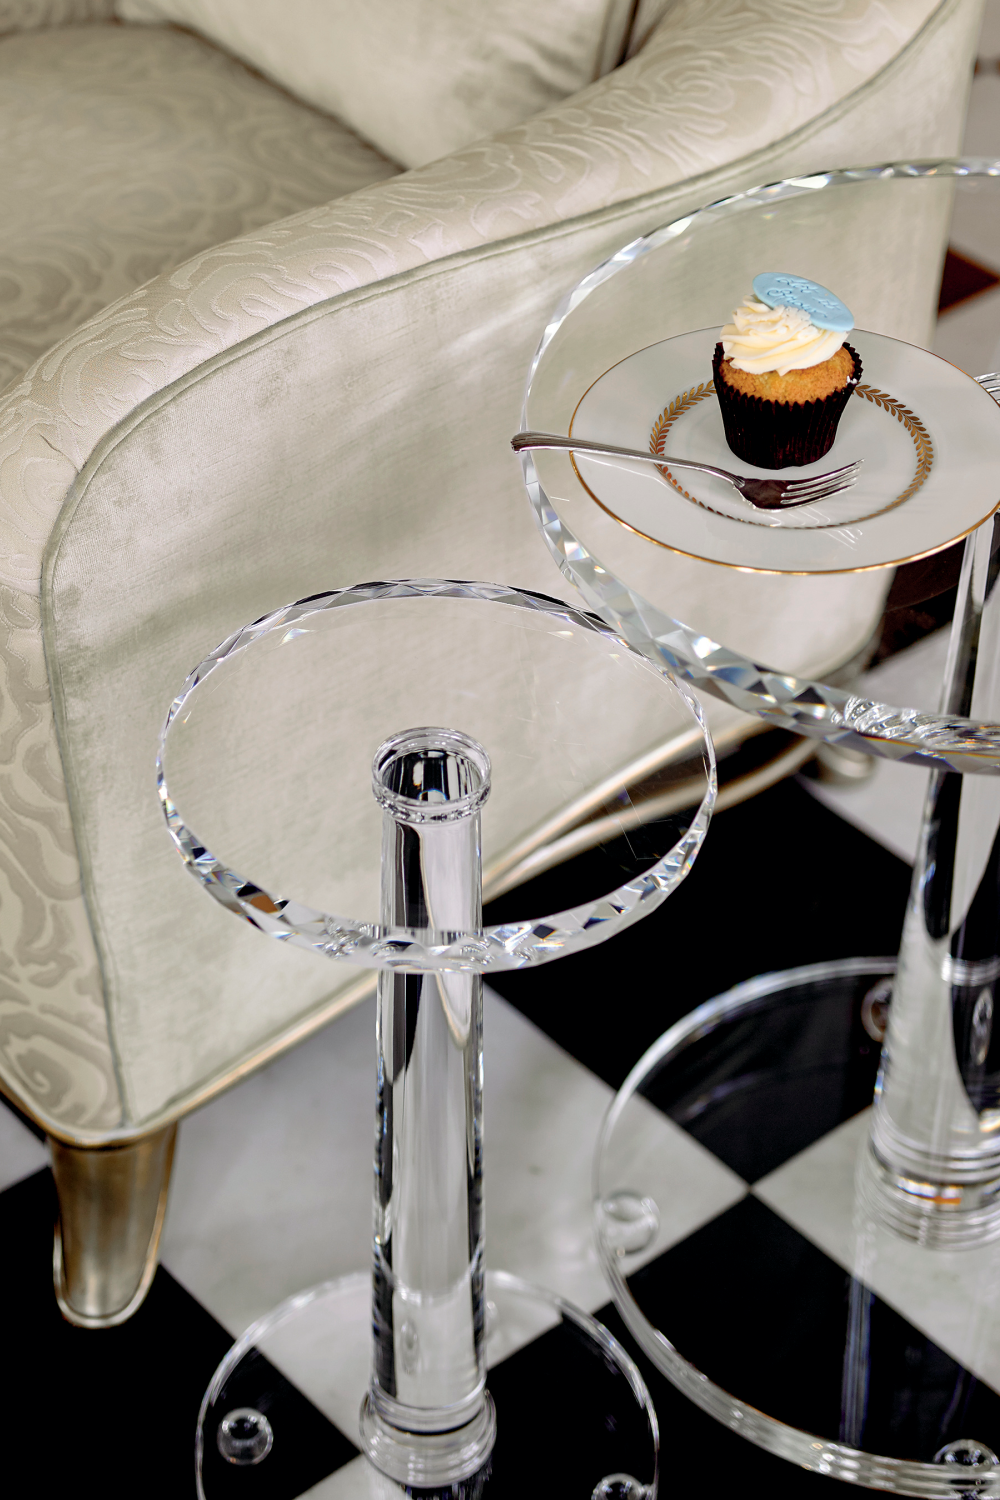 Cast Glass Pedestal Side Table | Caracole The Sophisticated | Oroa.com